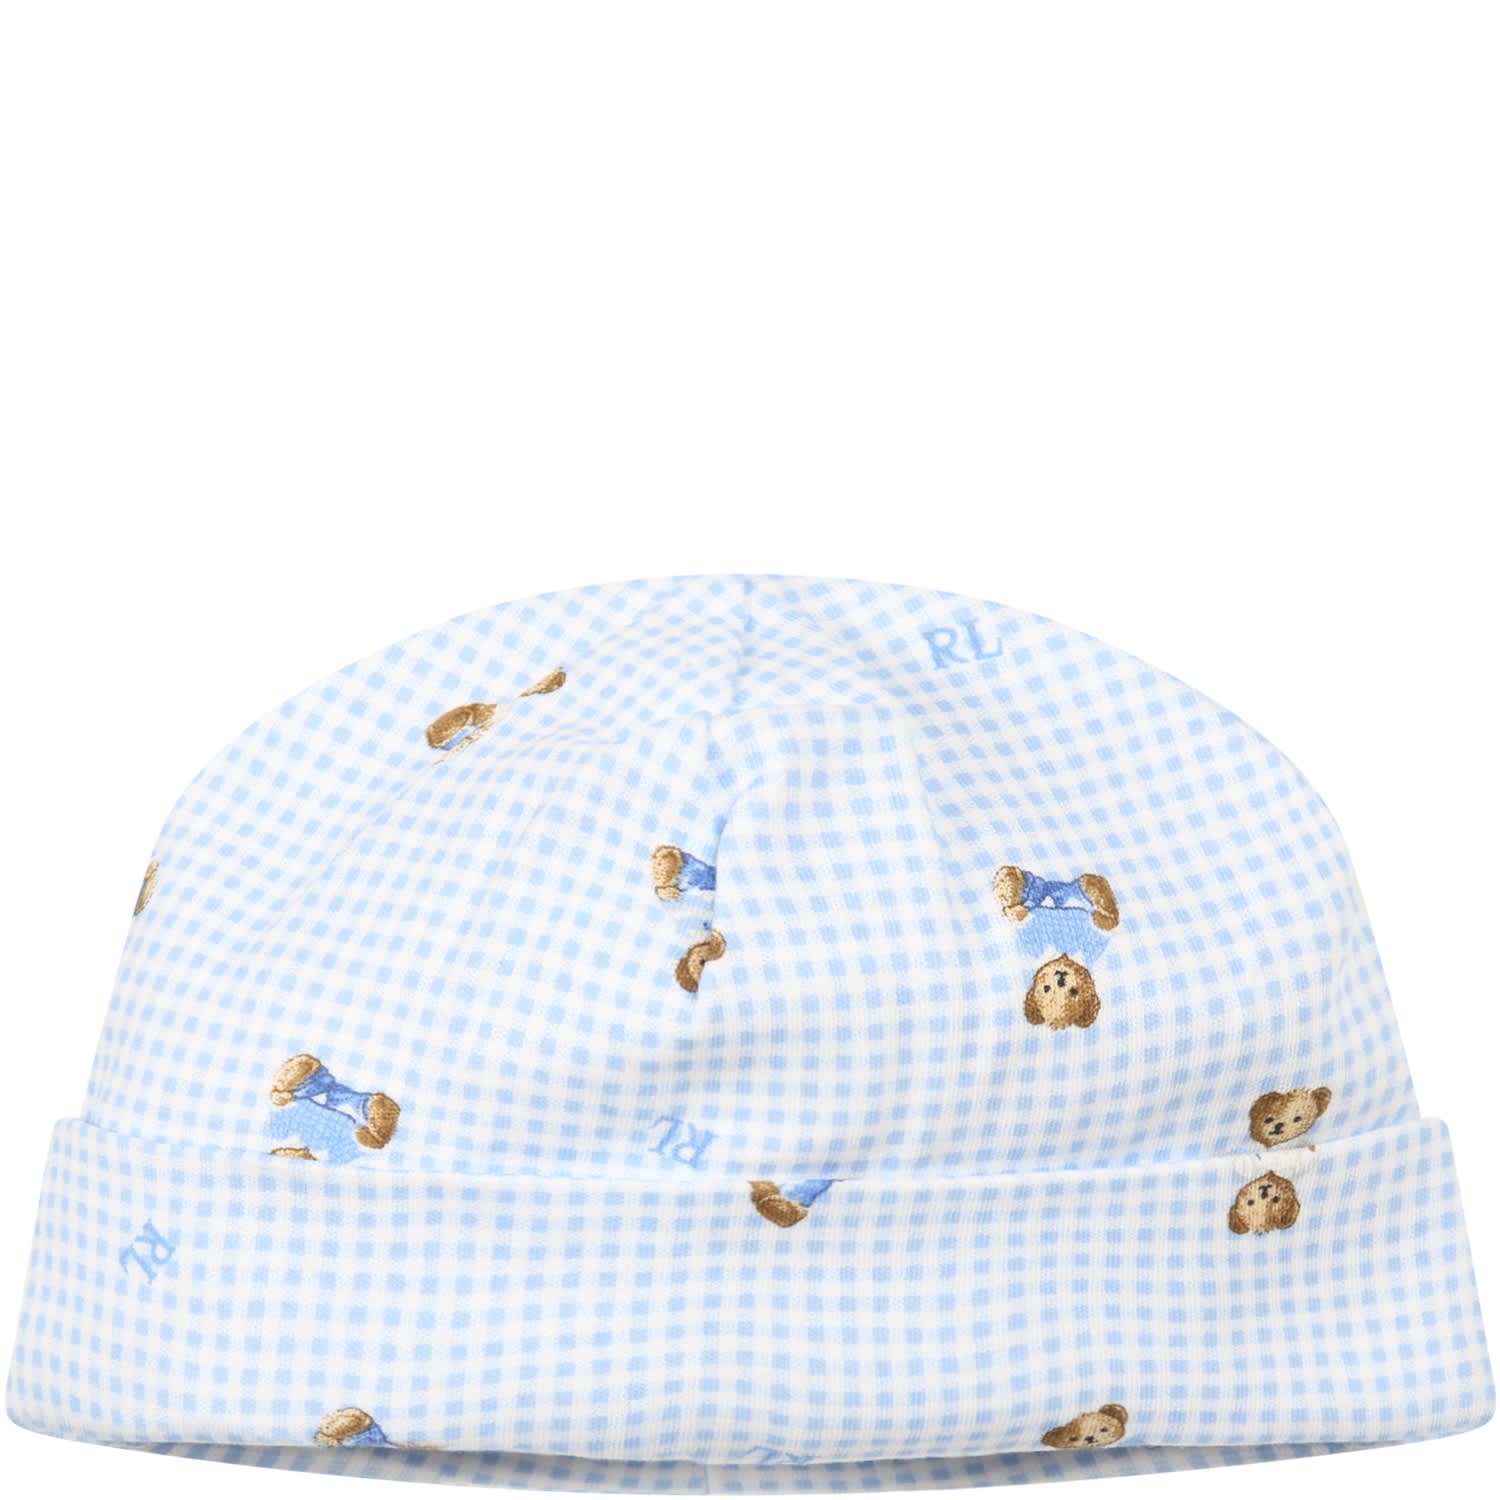 Ralph Lauren Multicolor Hat For Baby Boy With Bears